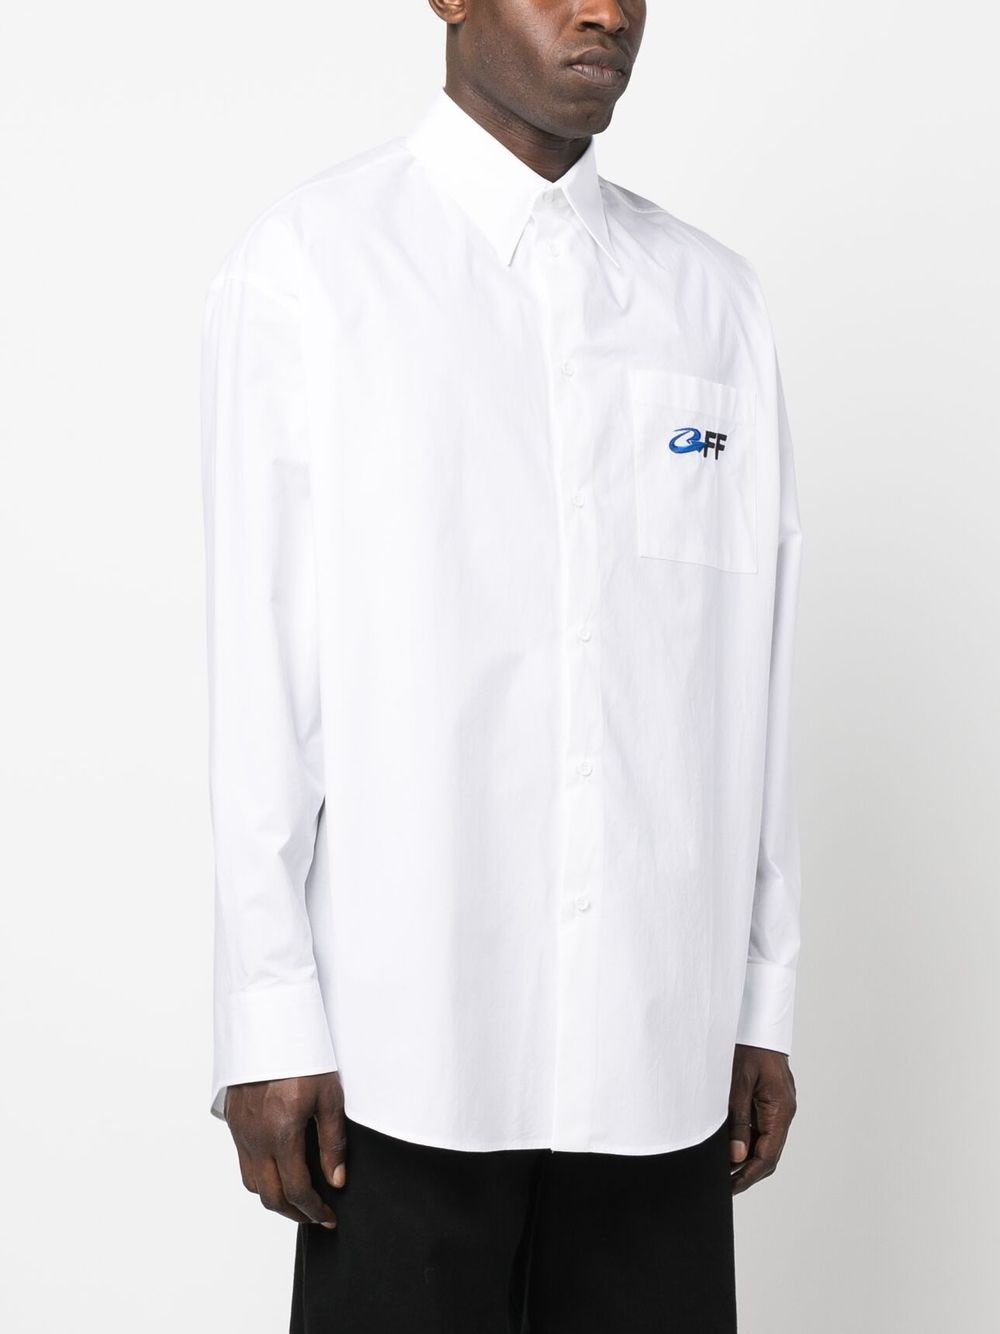 Exact Opp cotton shirt - 4